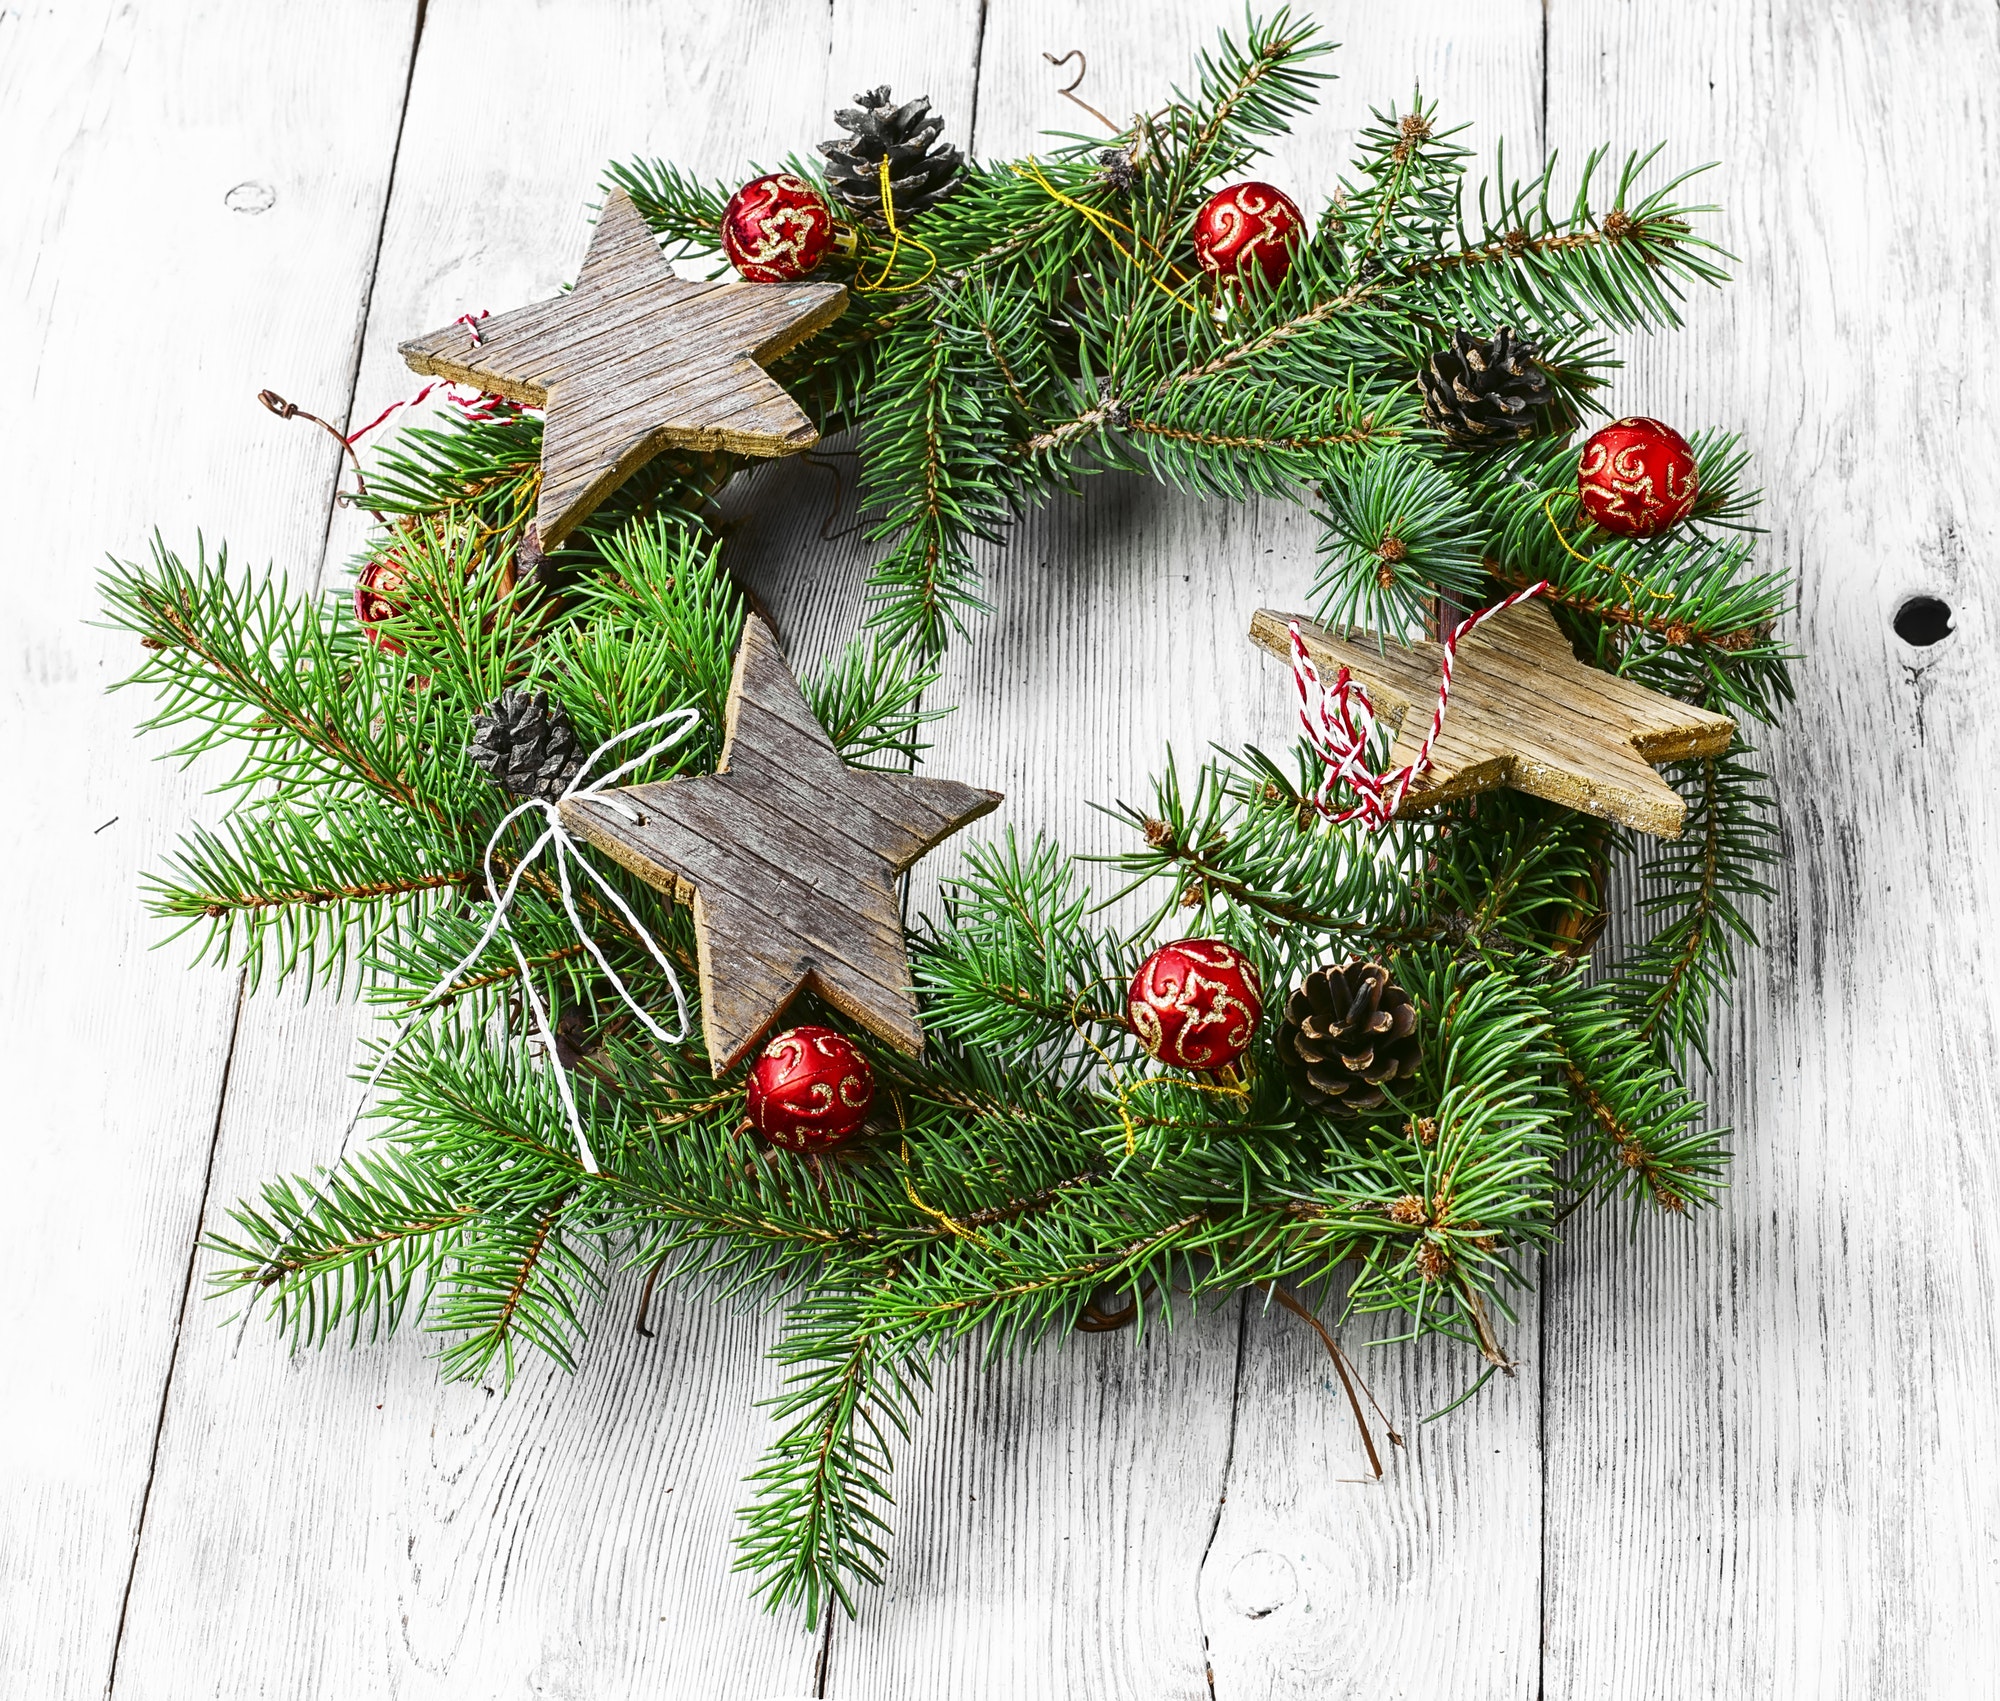 Symbolic Christmas wreath